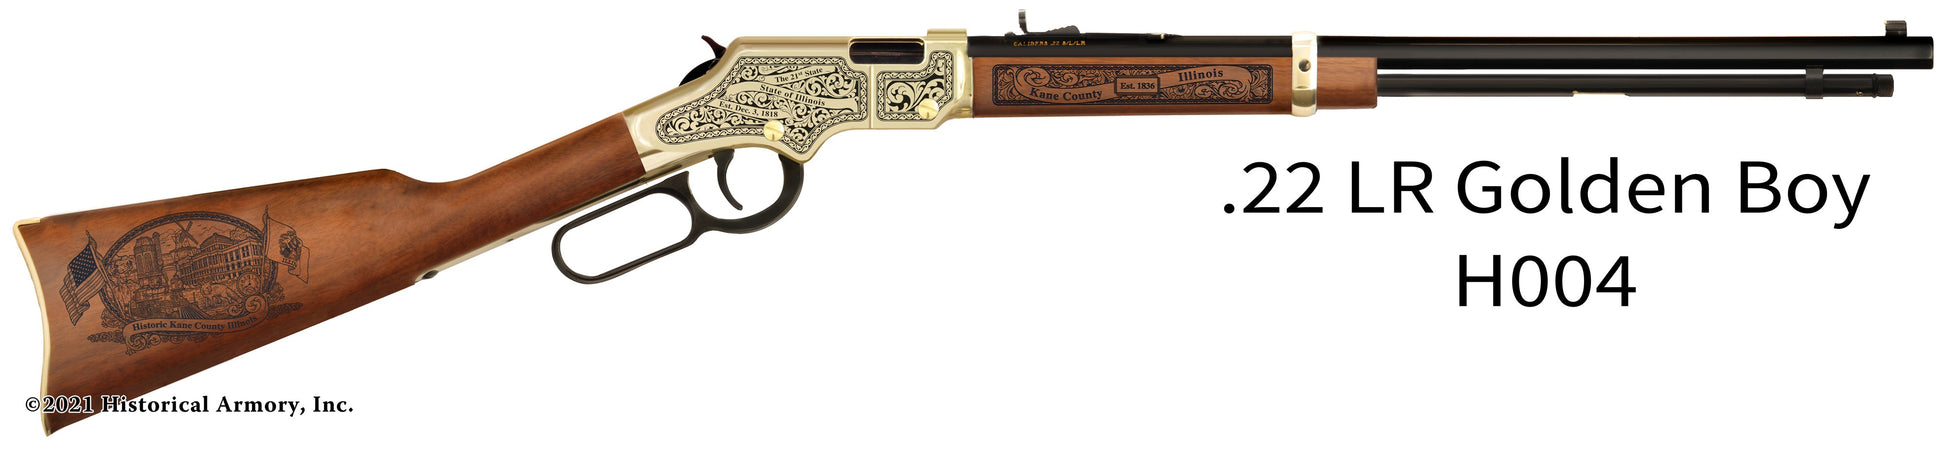 Kane County Illinois History Engraved  Rifle Henry Golden Boy .22 | Historical Armory